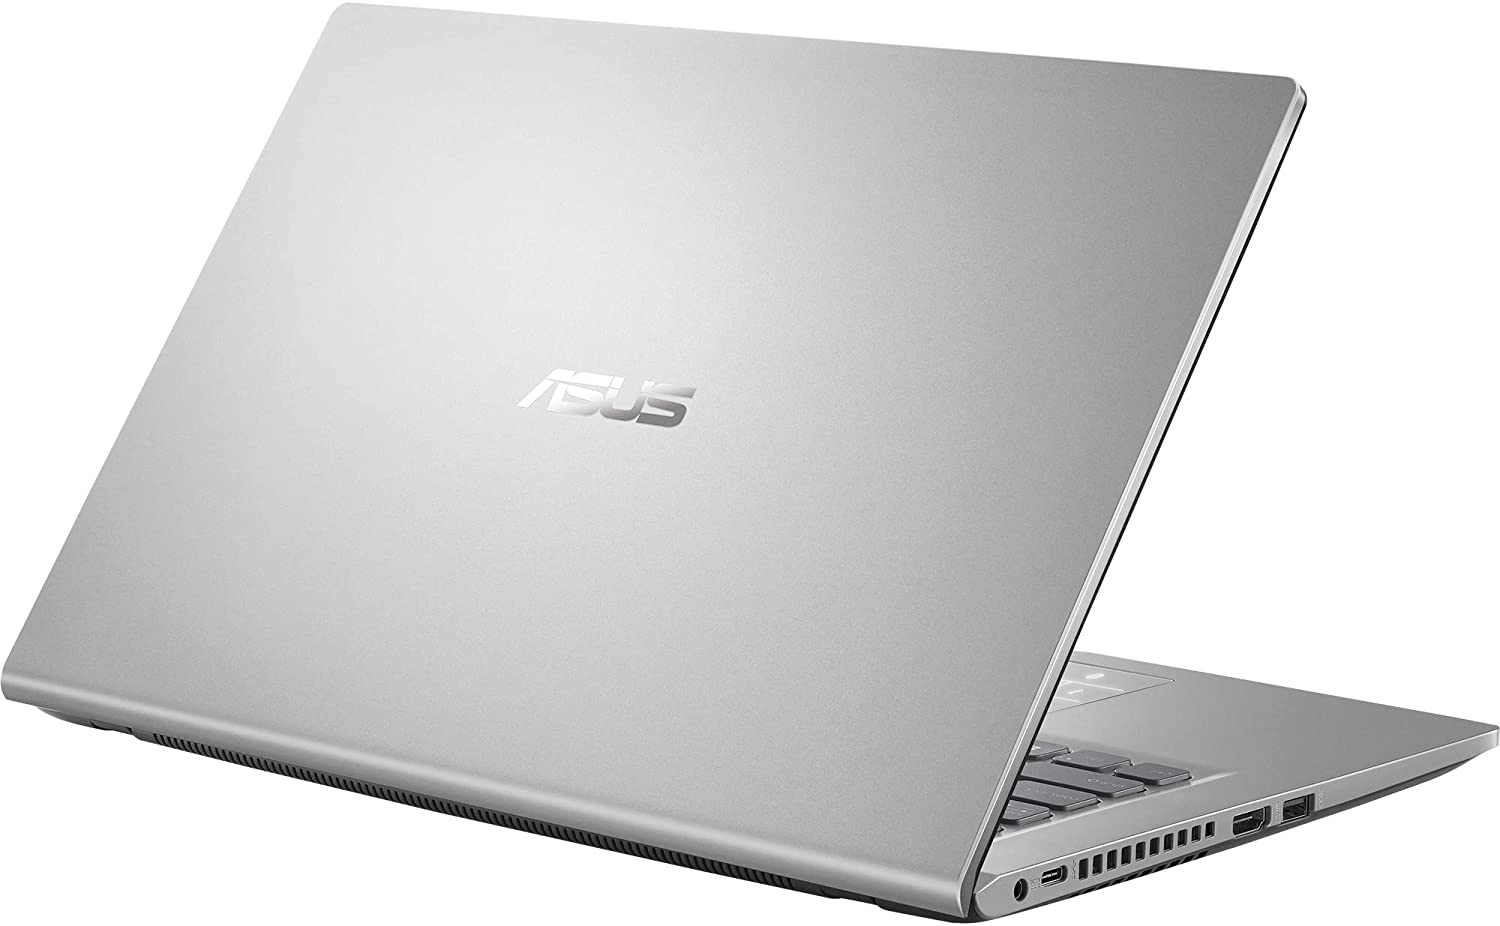 Asus F415JA-EK398T laptop image